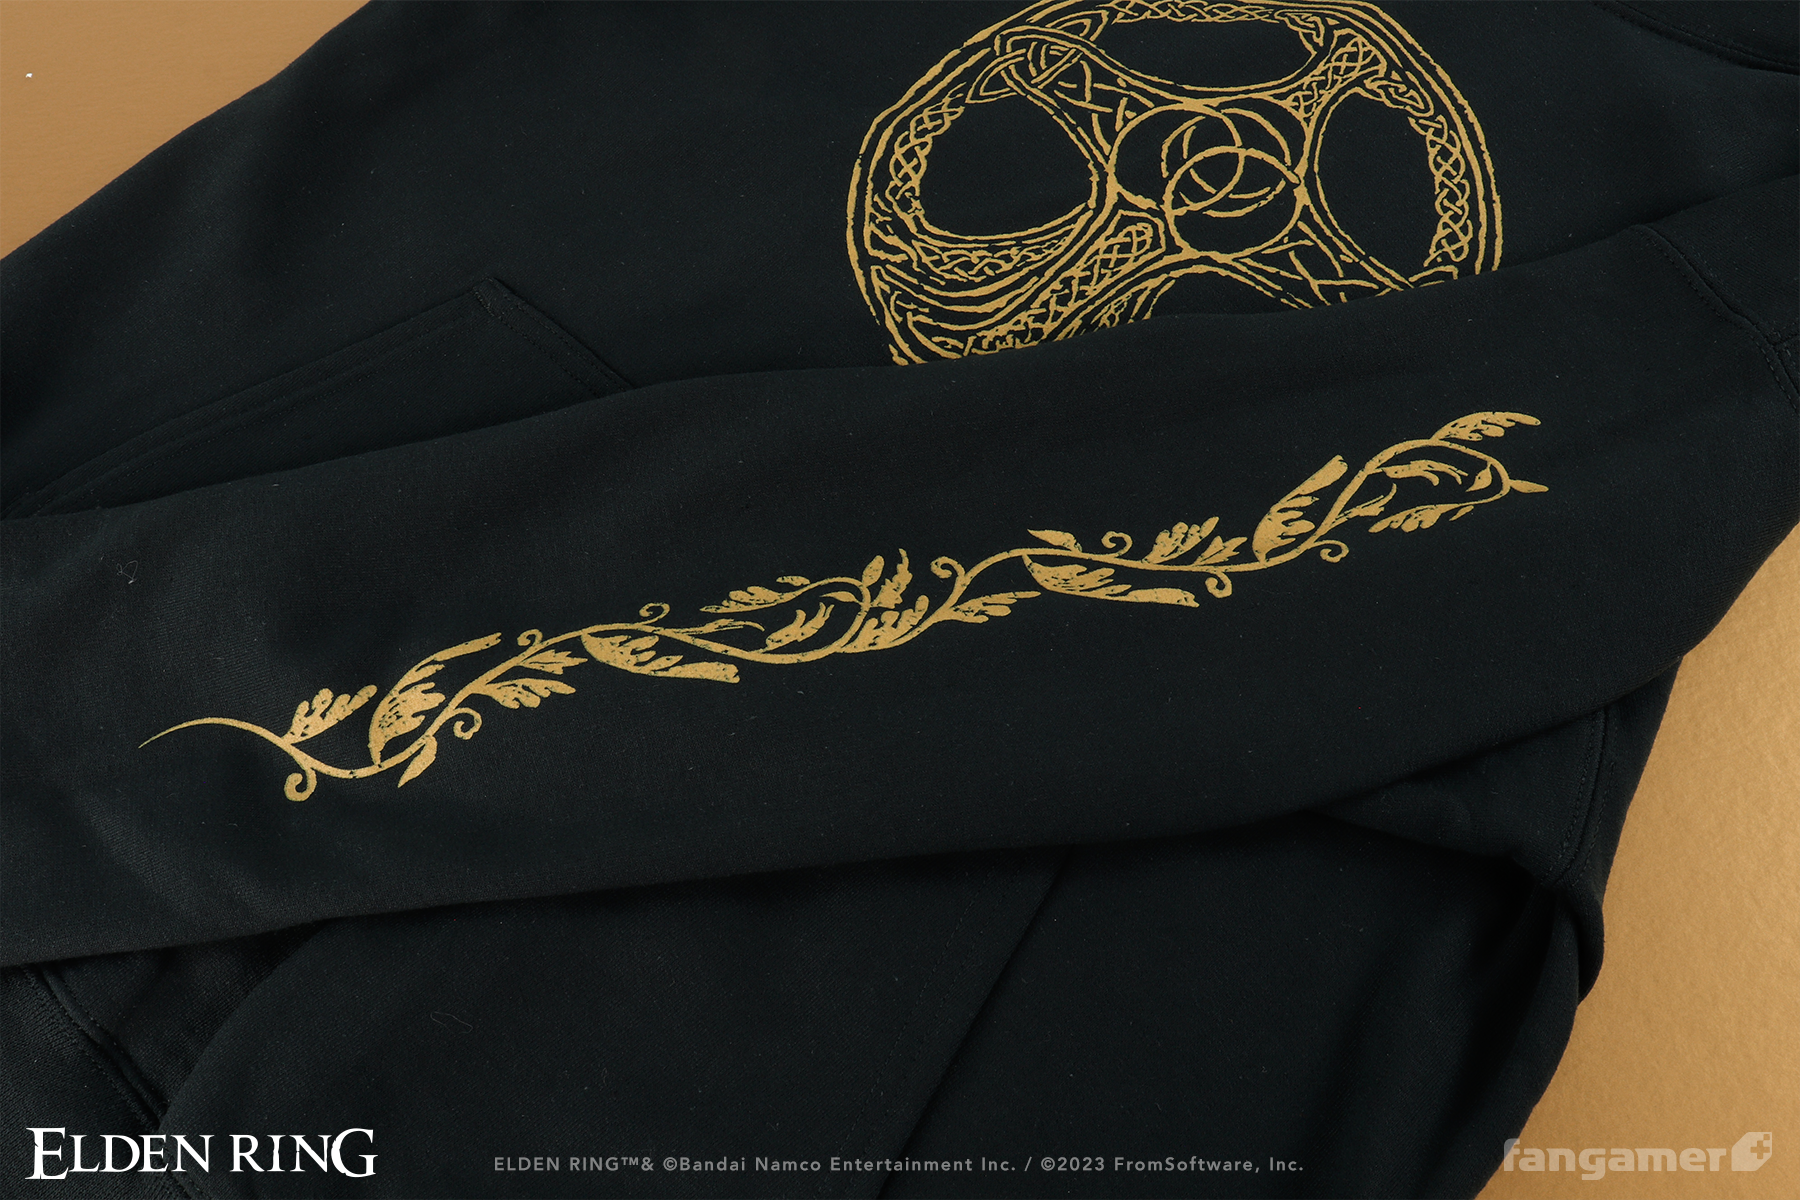 ELDEN RING」－ 黄金樹の紋章 パーカー - Fangamer Japan